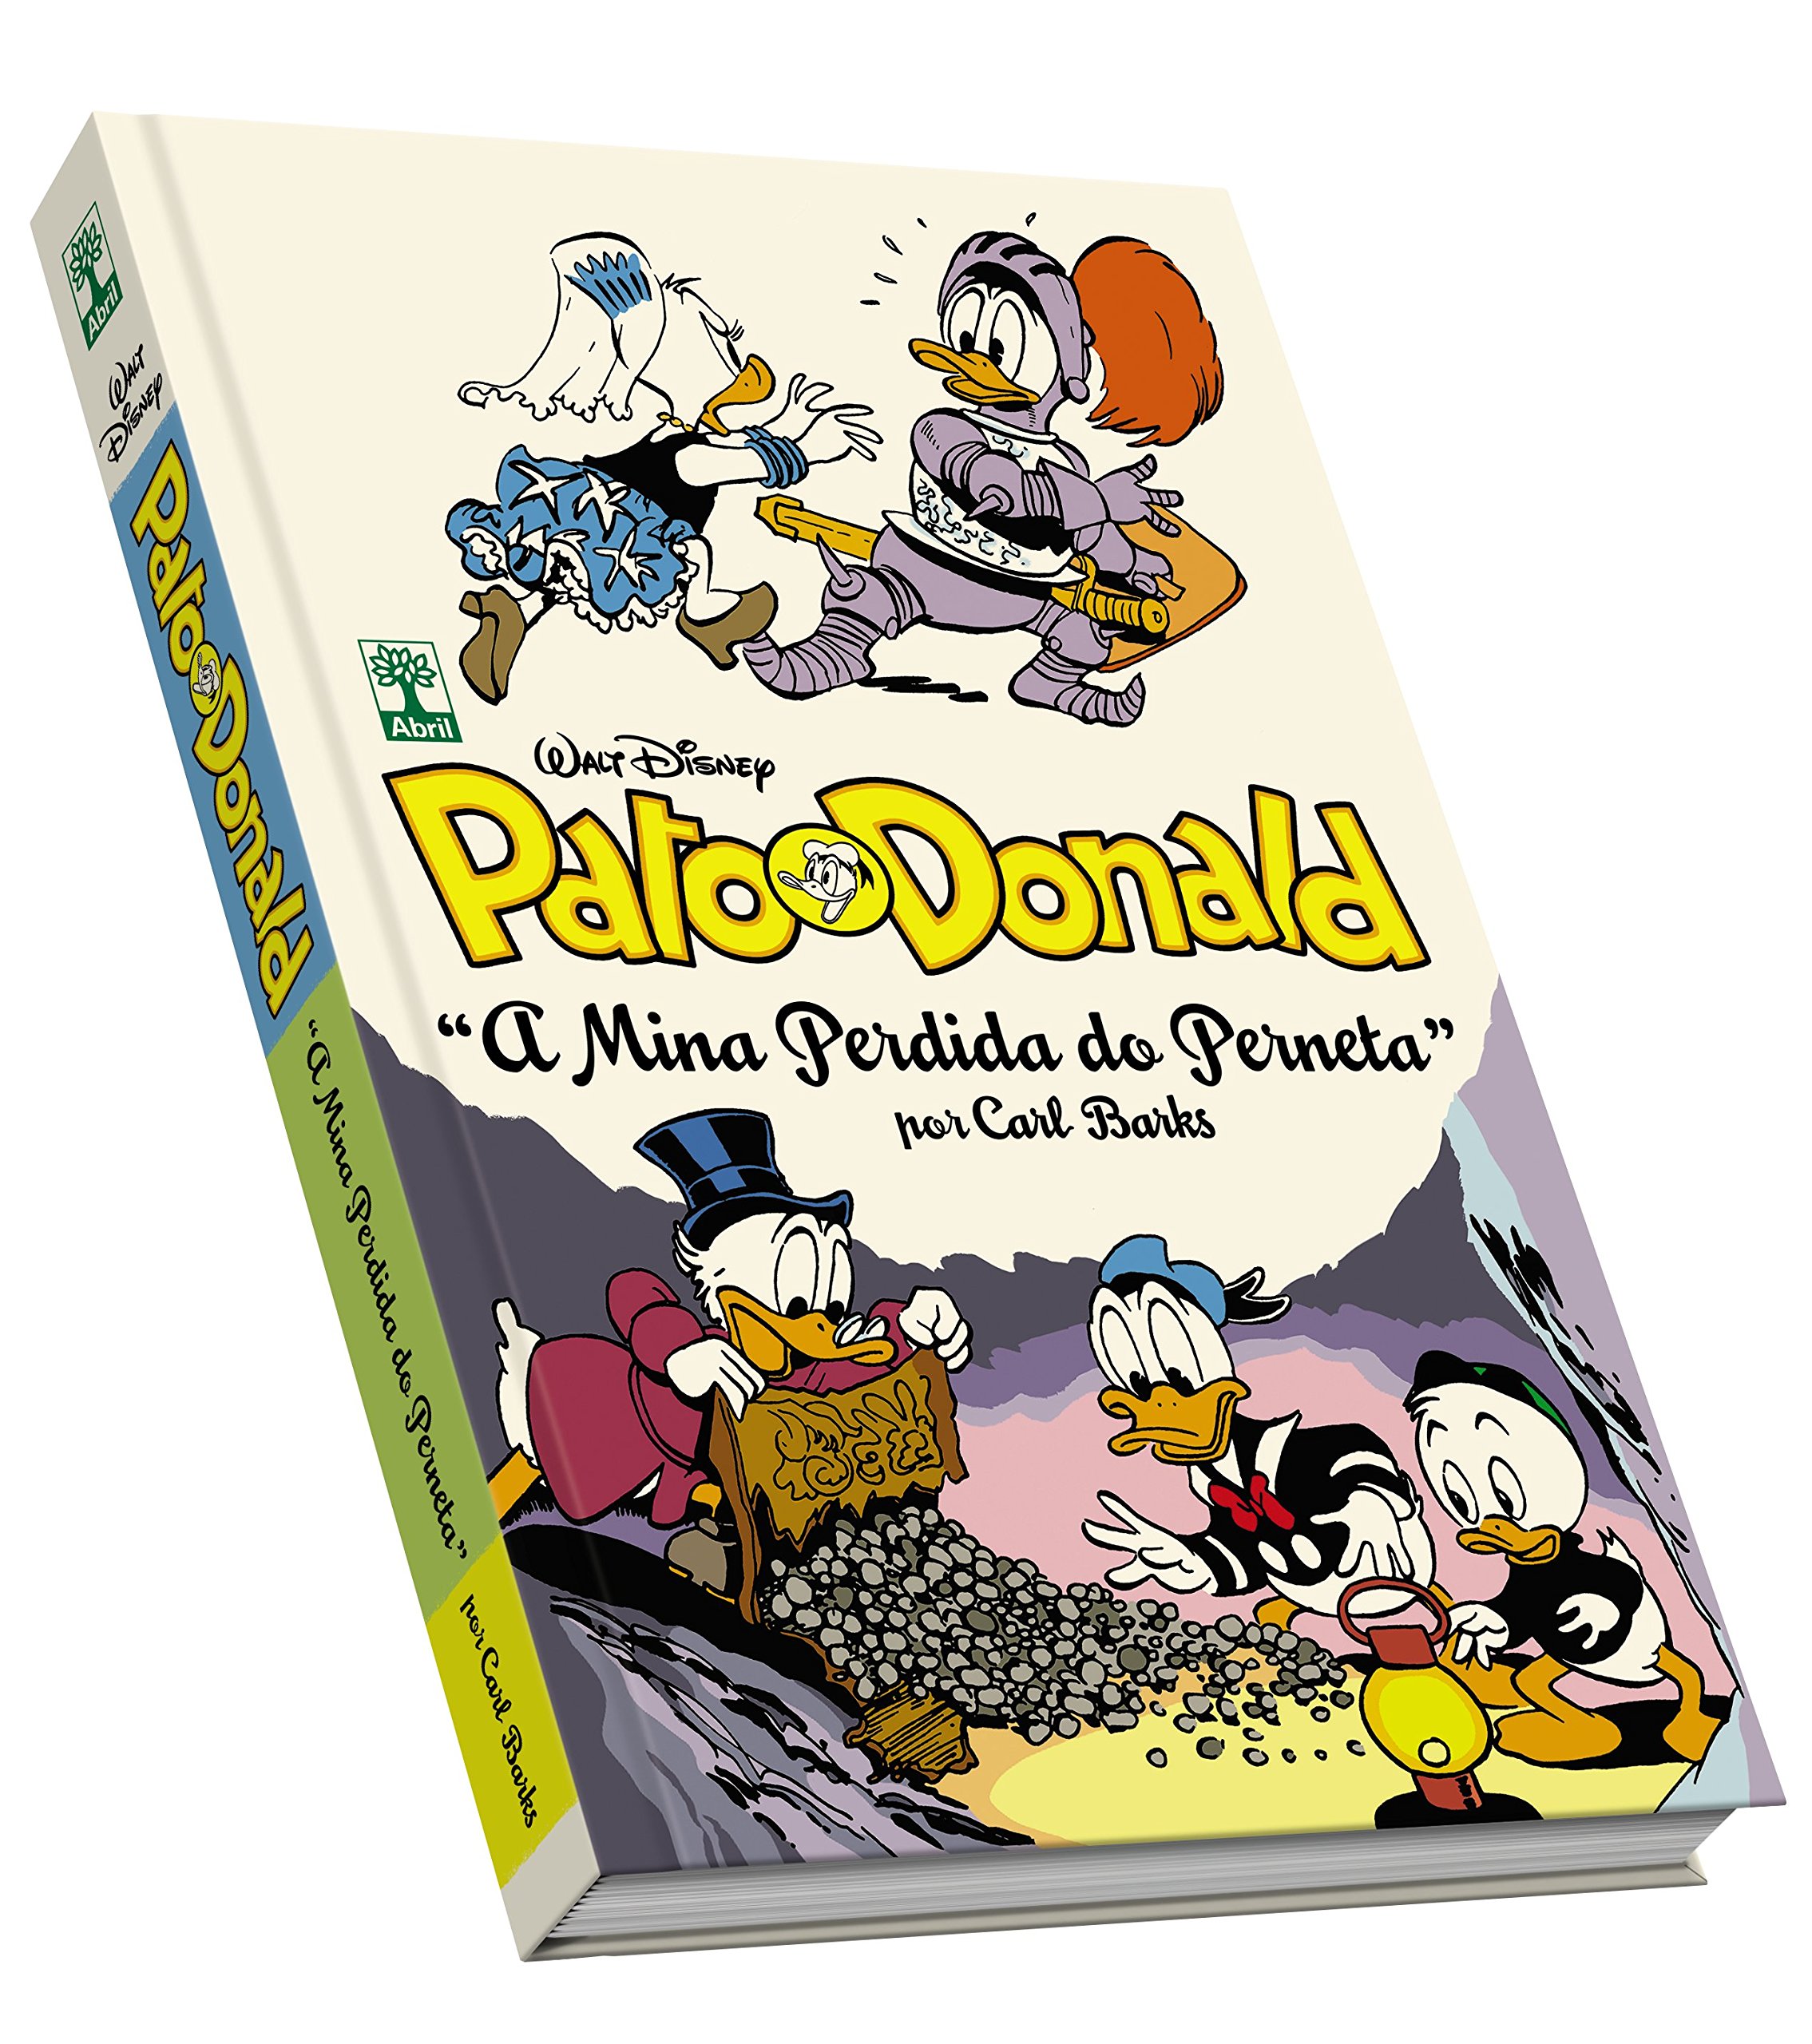 Resenha | Pato Donald por Carl Barks: A Mina Perdida do Perneta